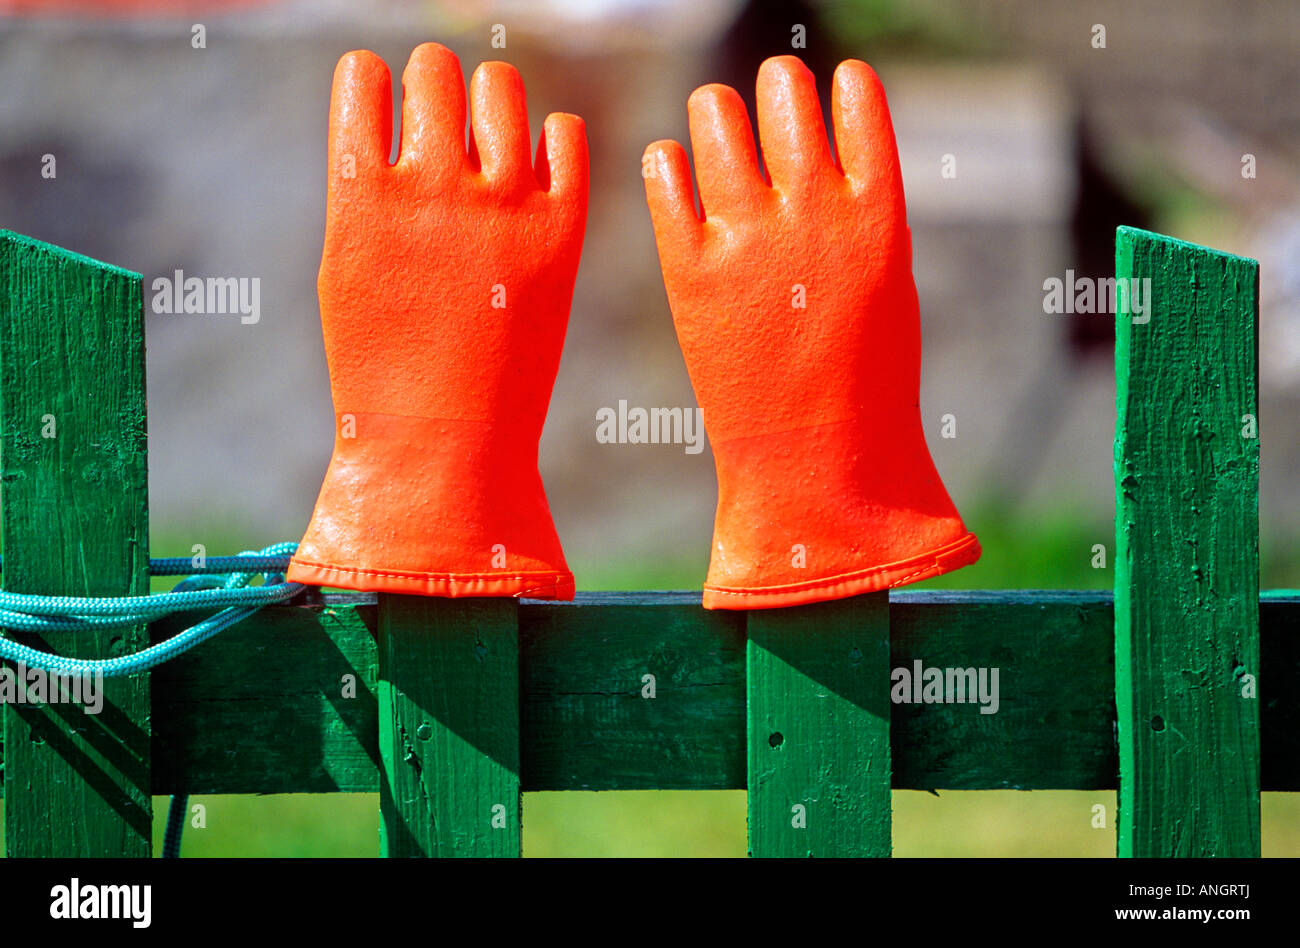 Angeln Handschuhe hängen am Zaun Norris Point, Neufundland, Kanada. Stockfoto